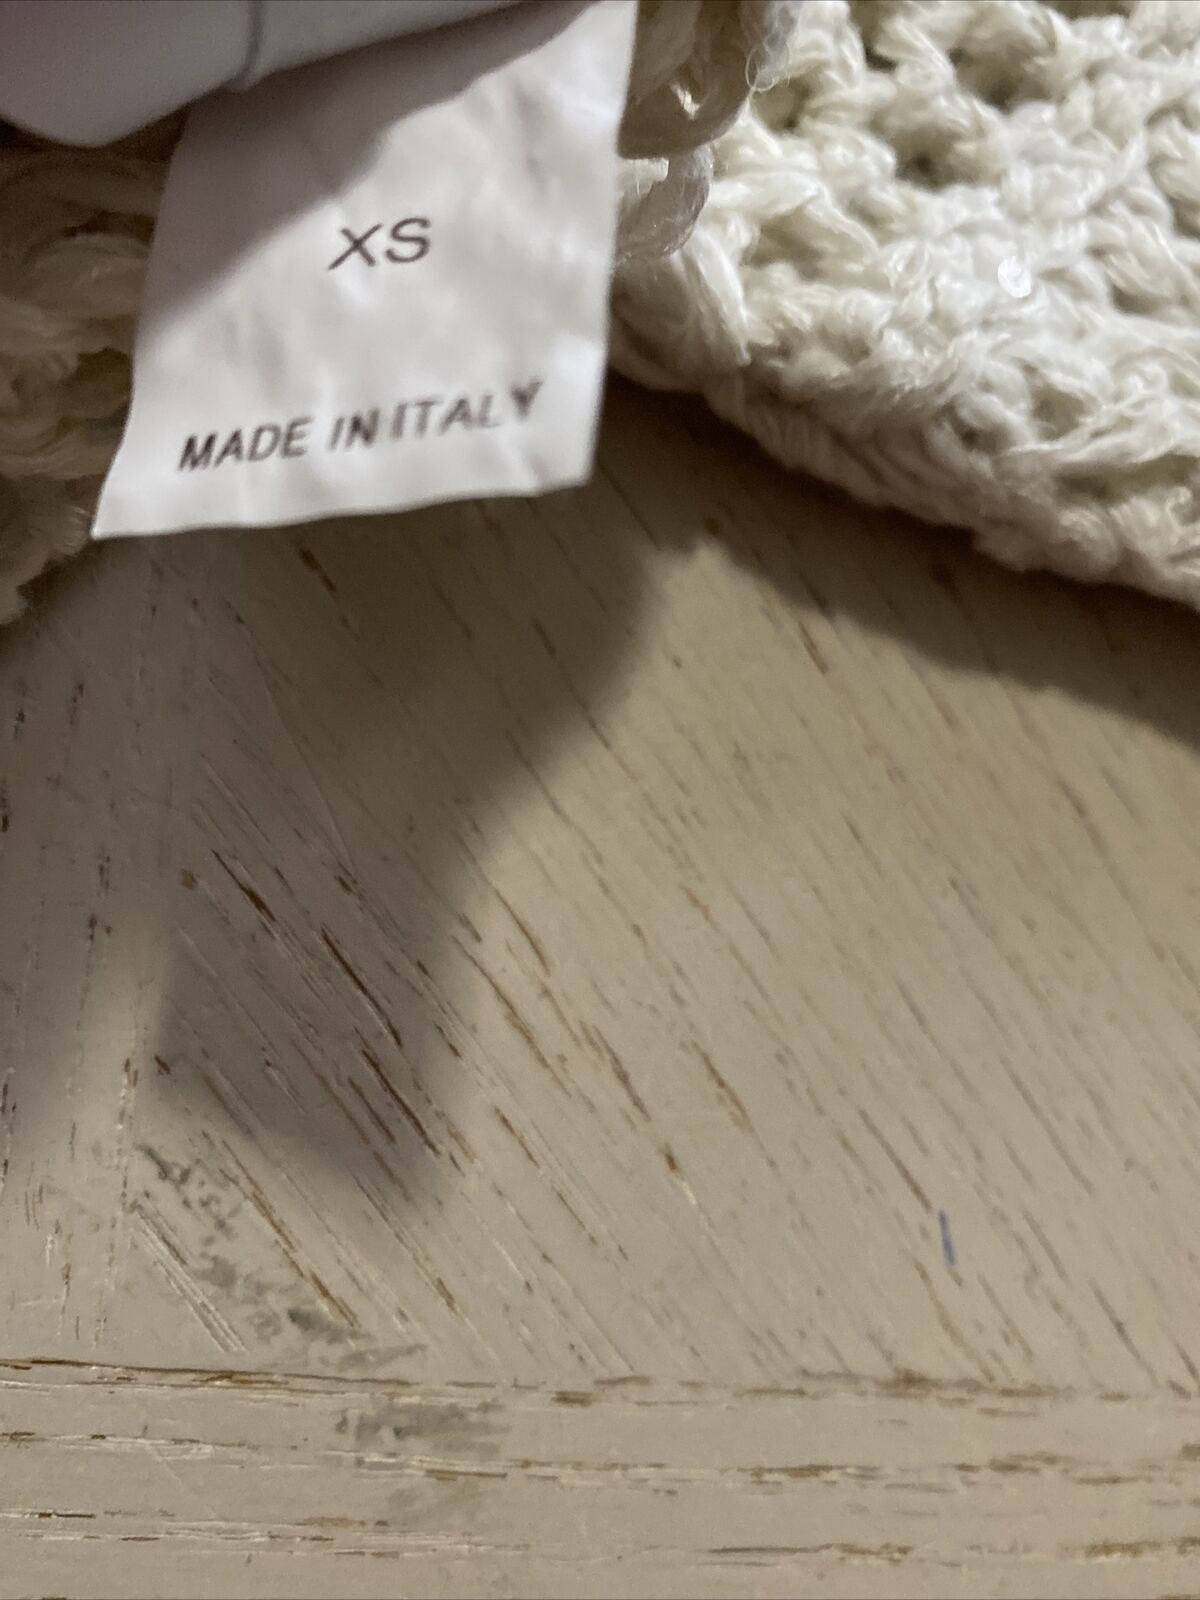 New $2595 Brunello Cucinelli Women Open Weave Cardigan Color Oatmeal Size XS